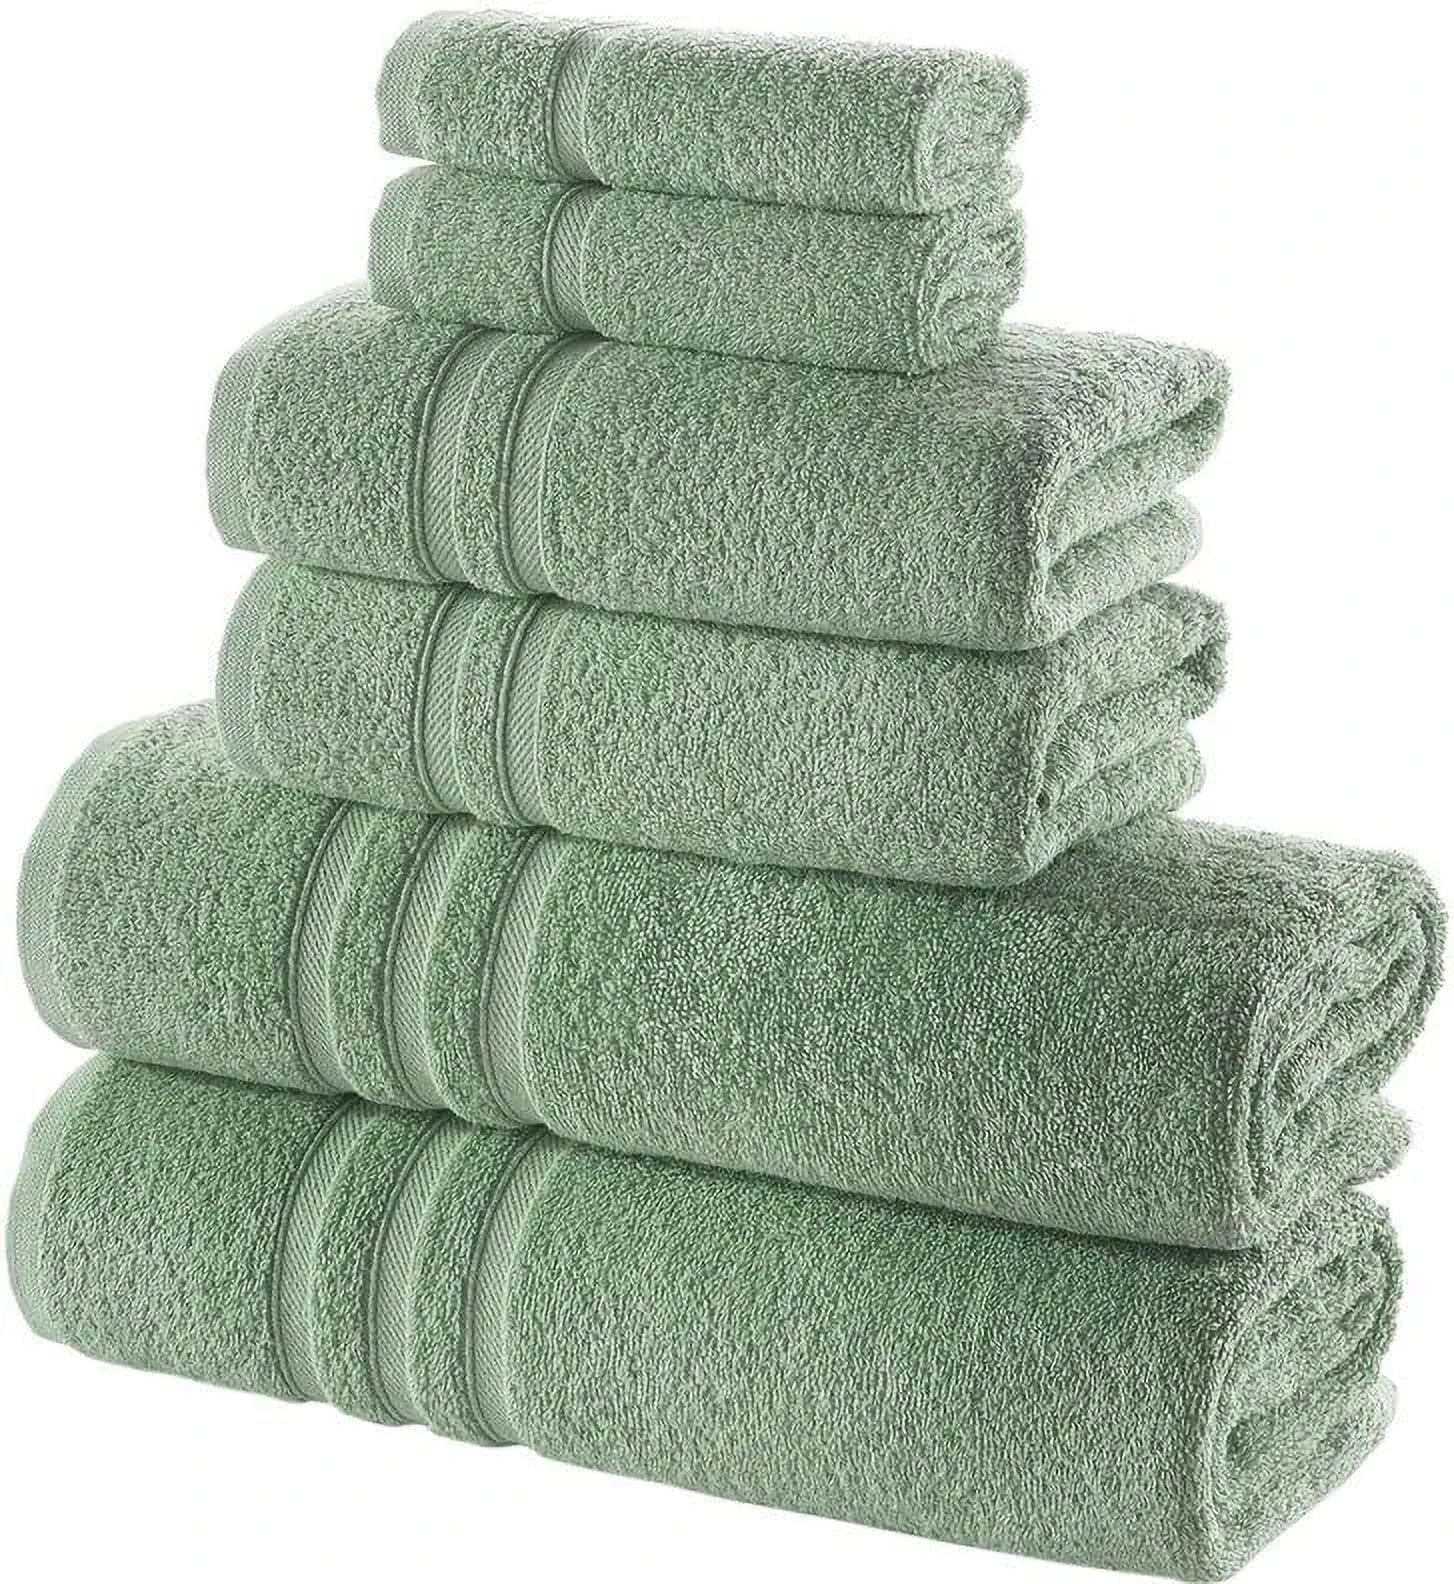 Homgreen Cotton Paradise The Best Brand Awards, 6 Piece Towel Set, Turkish  Cotton Soft Absorbent Towels for Bathroom, 2 Bath Towels 2 Hand Towels 2  Washcloths, Sage Green Towel Set 